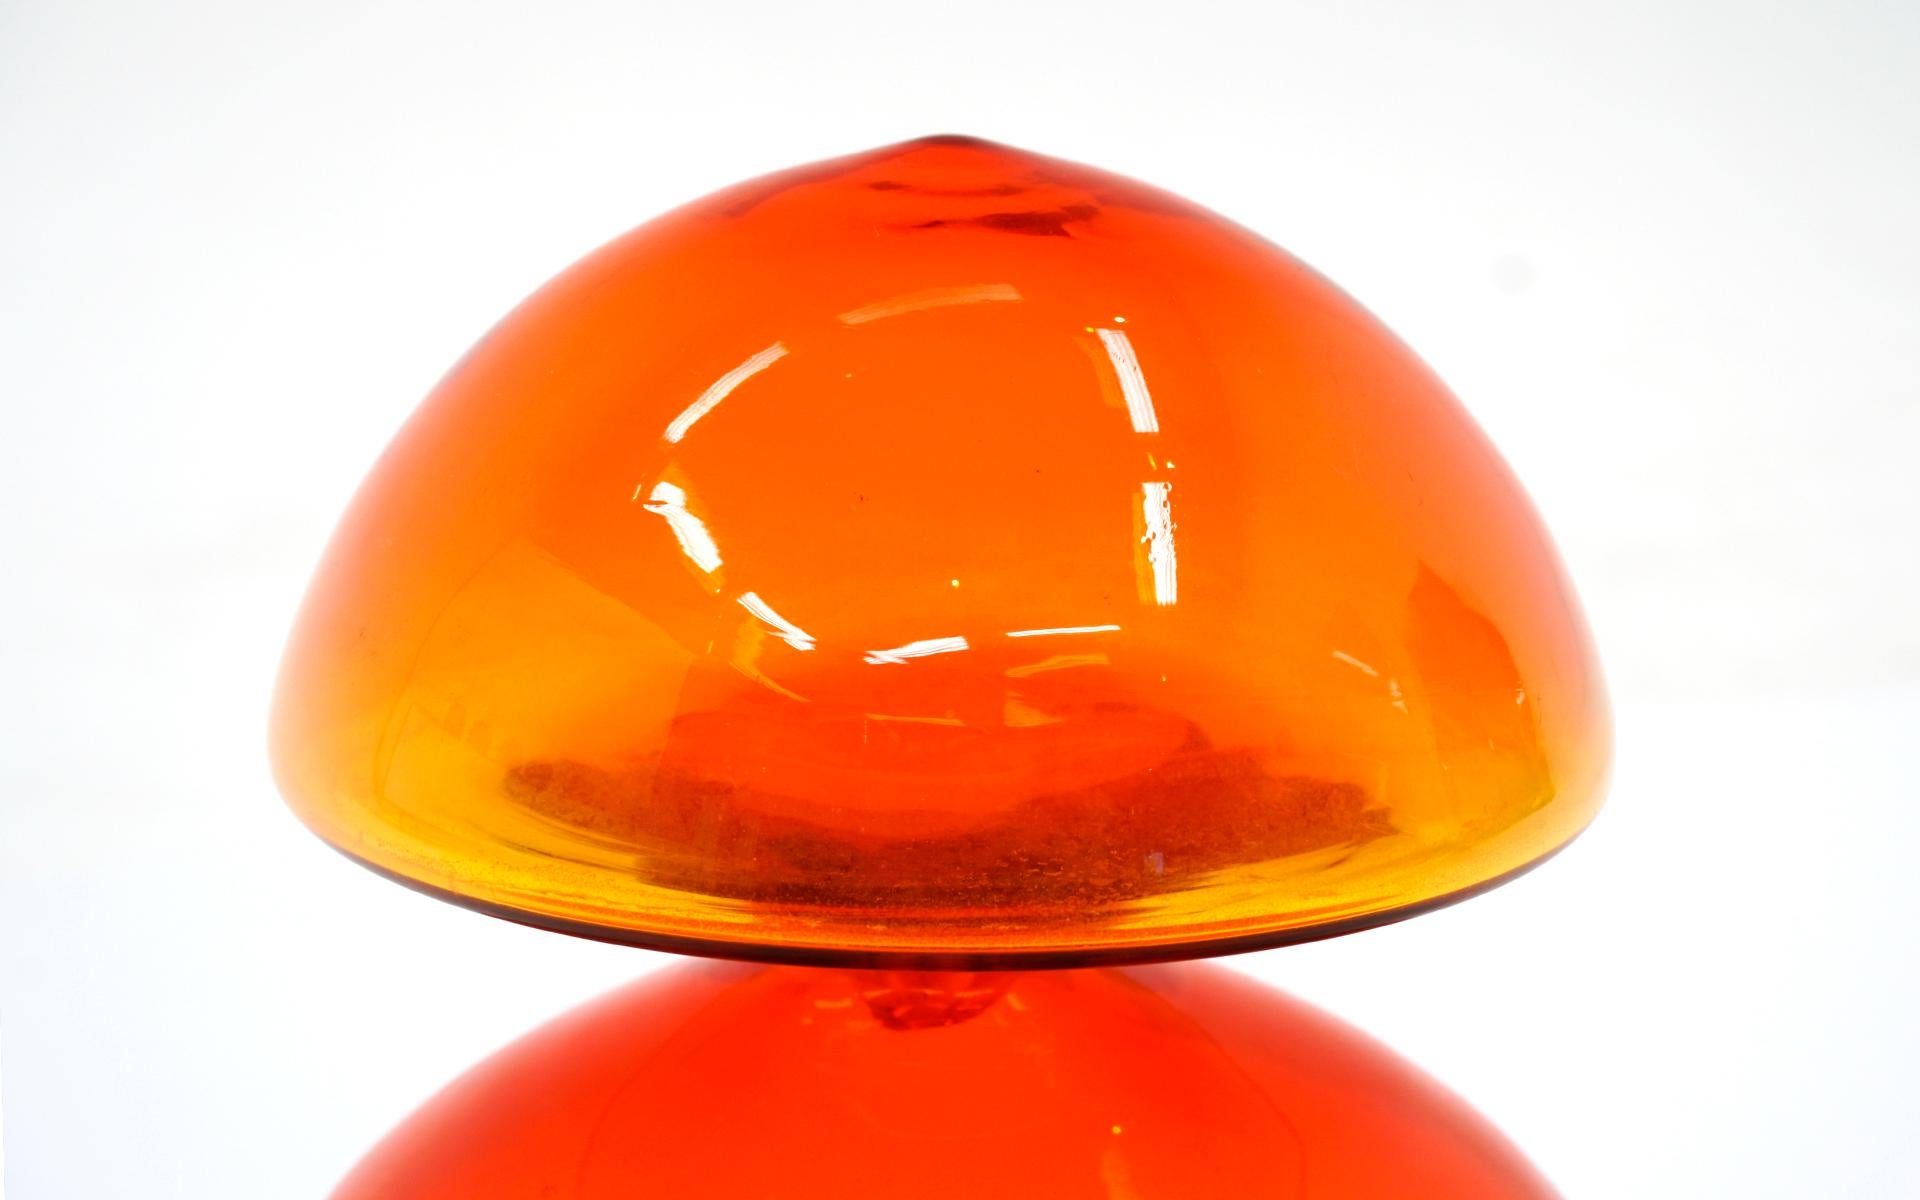 Hand blown artglass decanter / bottle with stopper by Blenko. Striking bright orange.